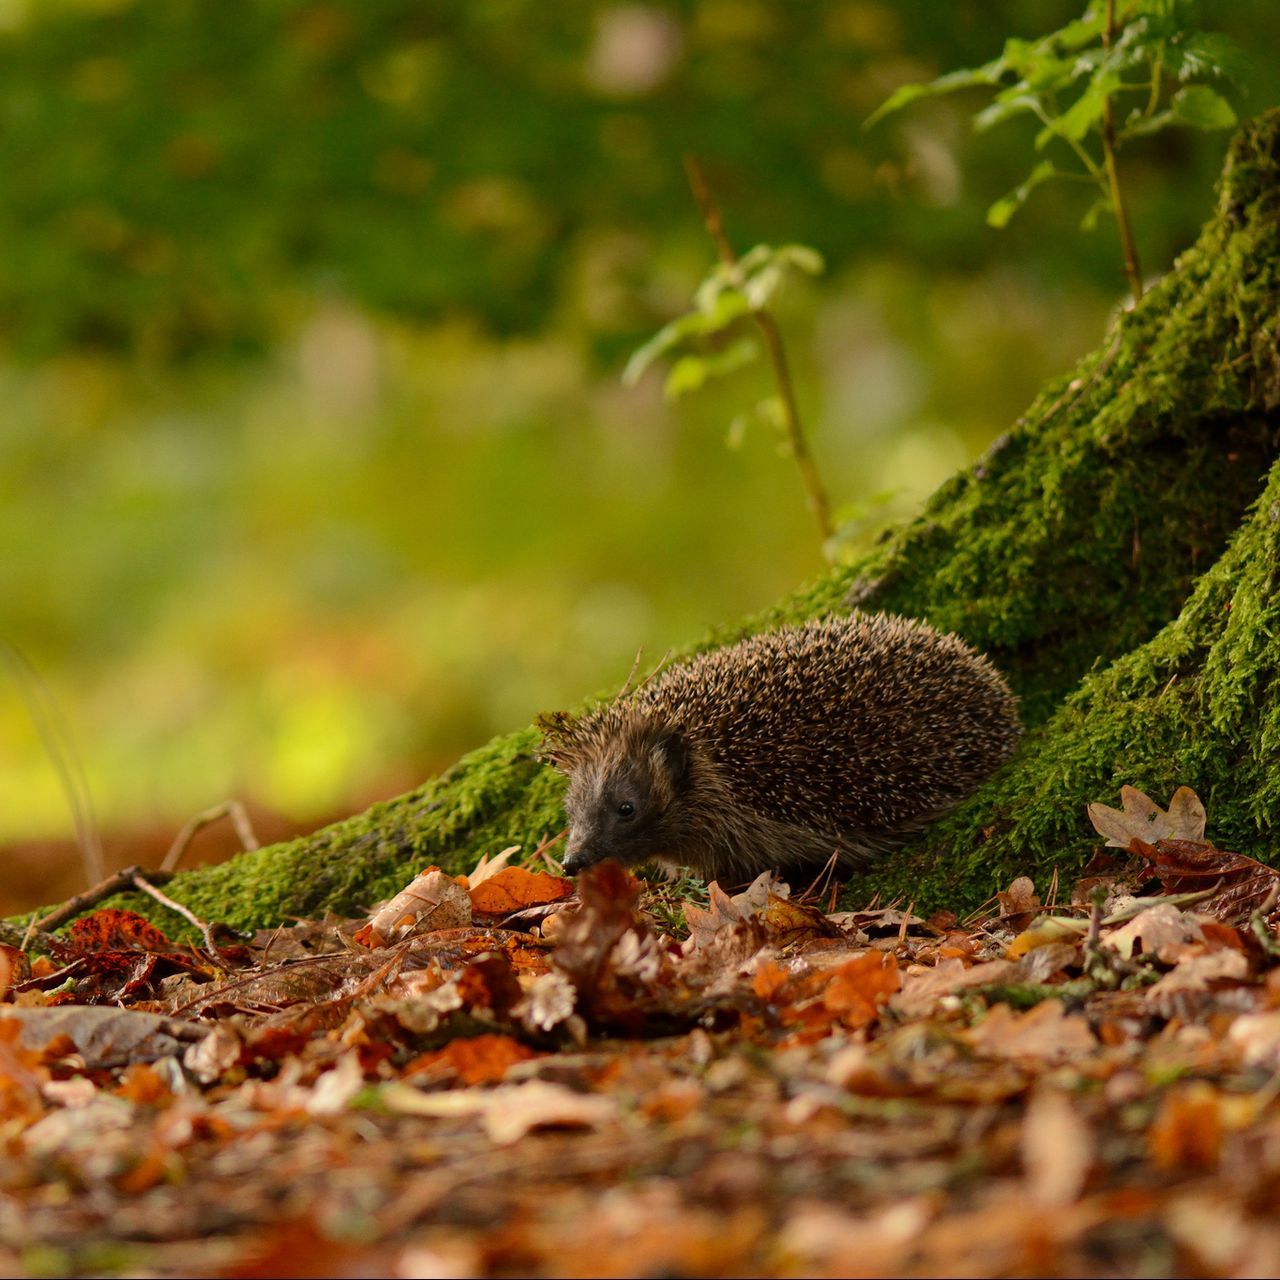 Download wallpaper 1280x1280 hedgehog, animal, leaves, autumn, trees, moss ipad, ipad ipad mini for parallax HD background